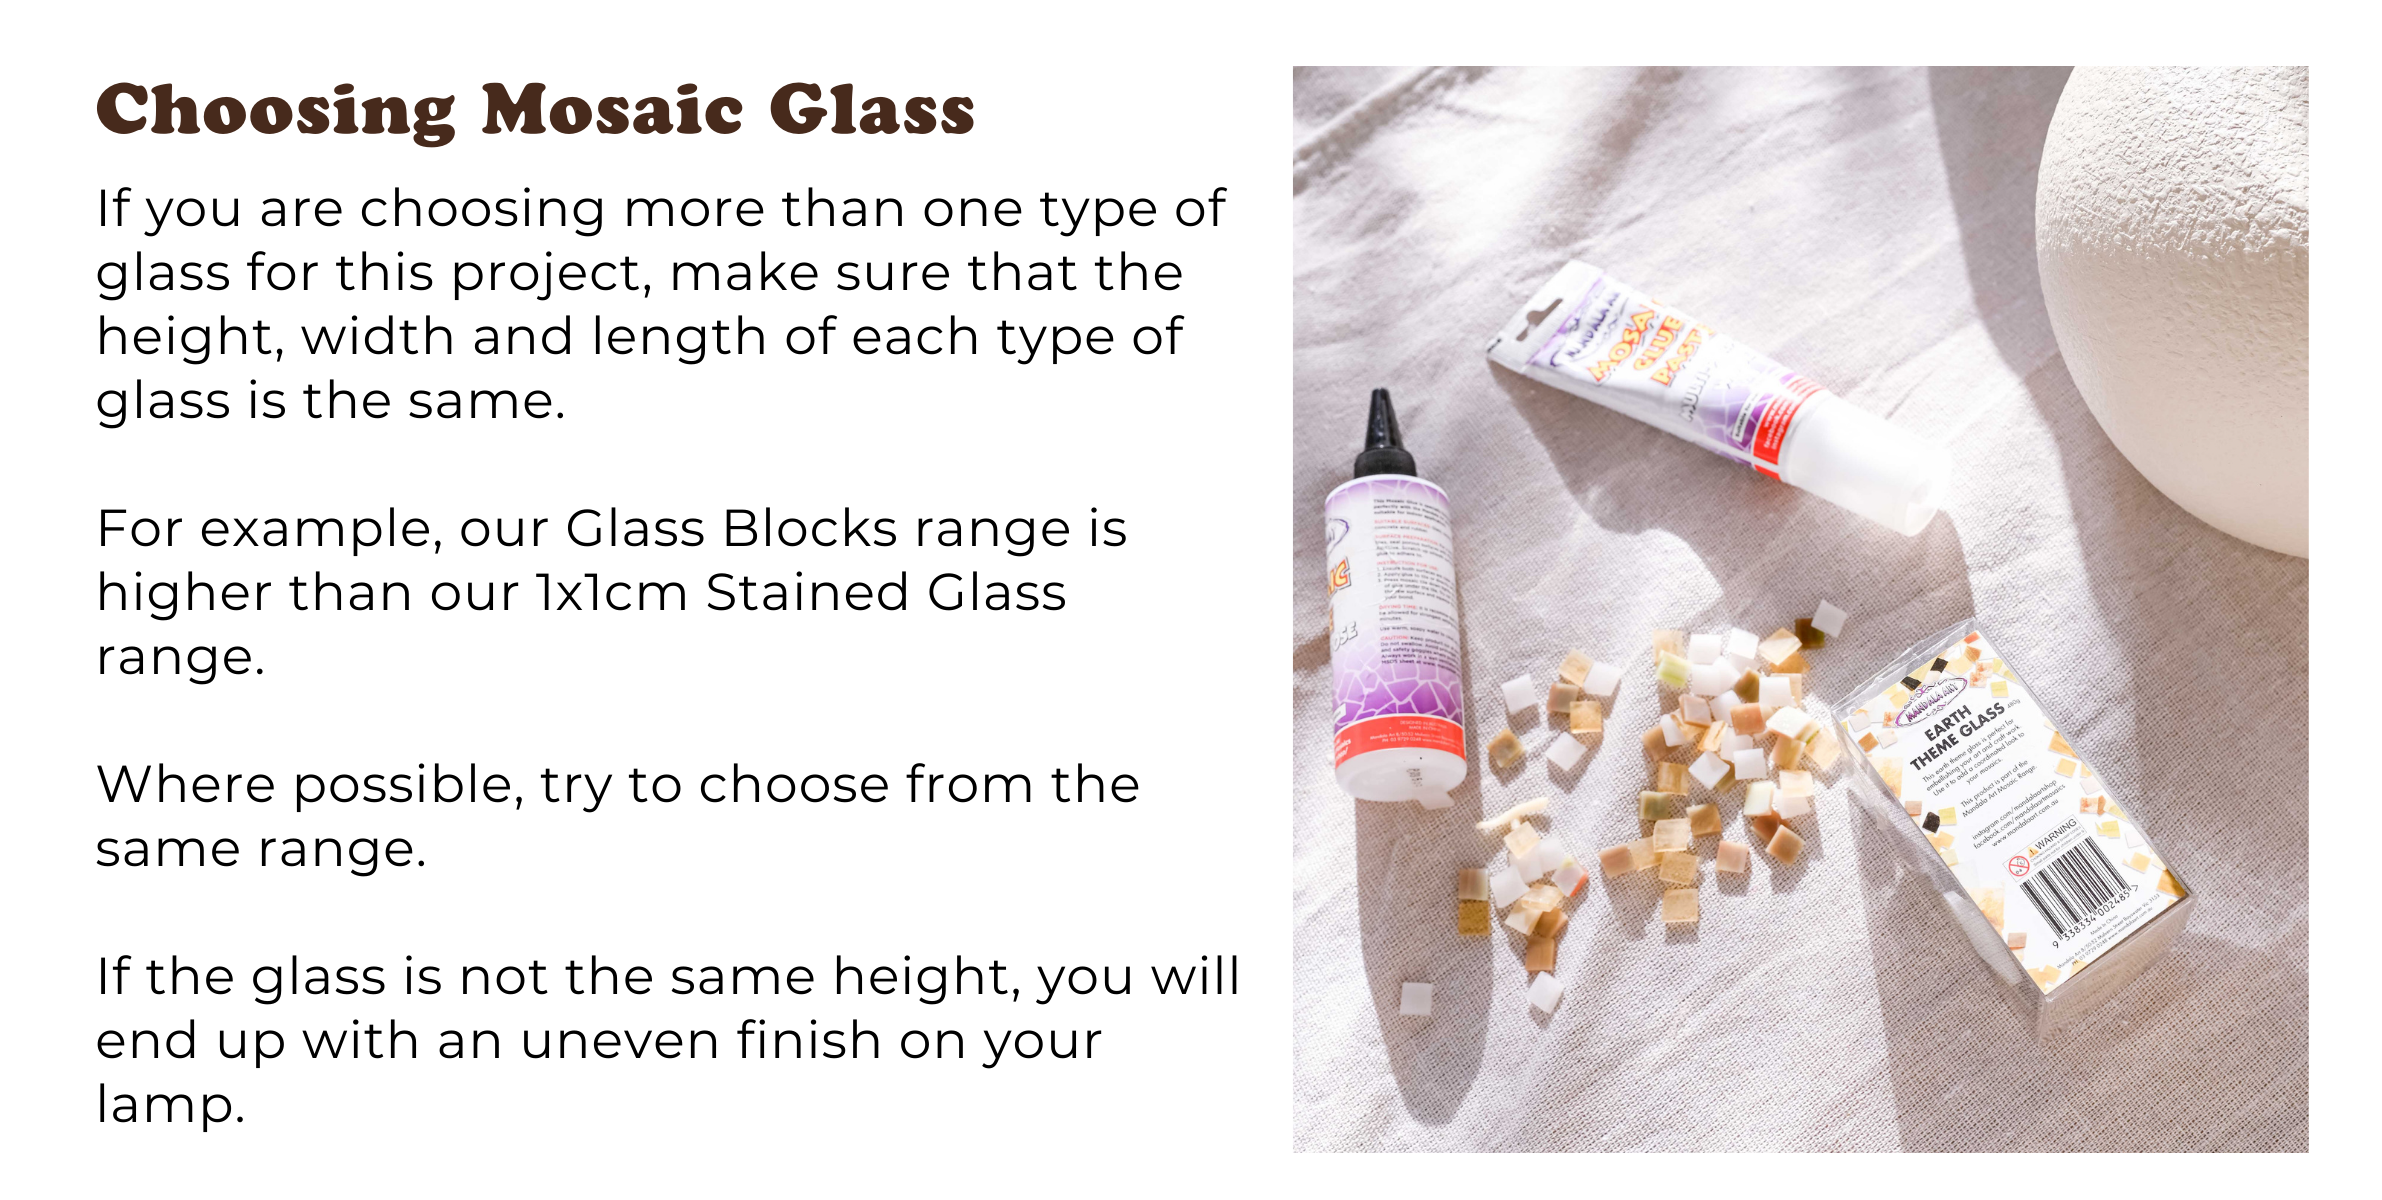 Choosing mosaic glass